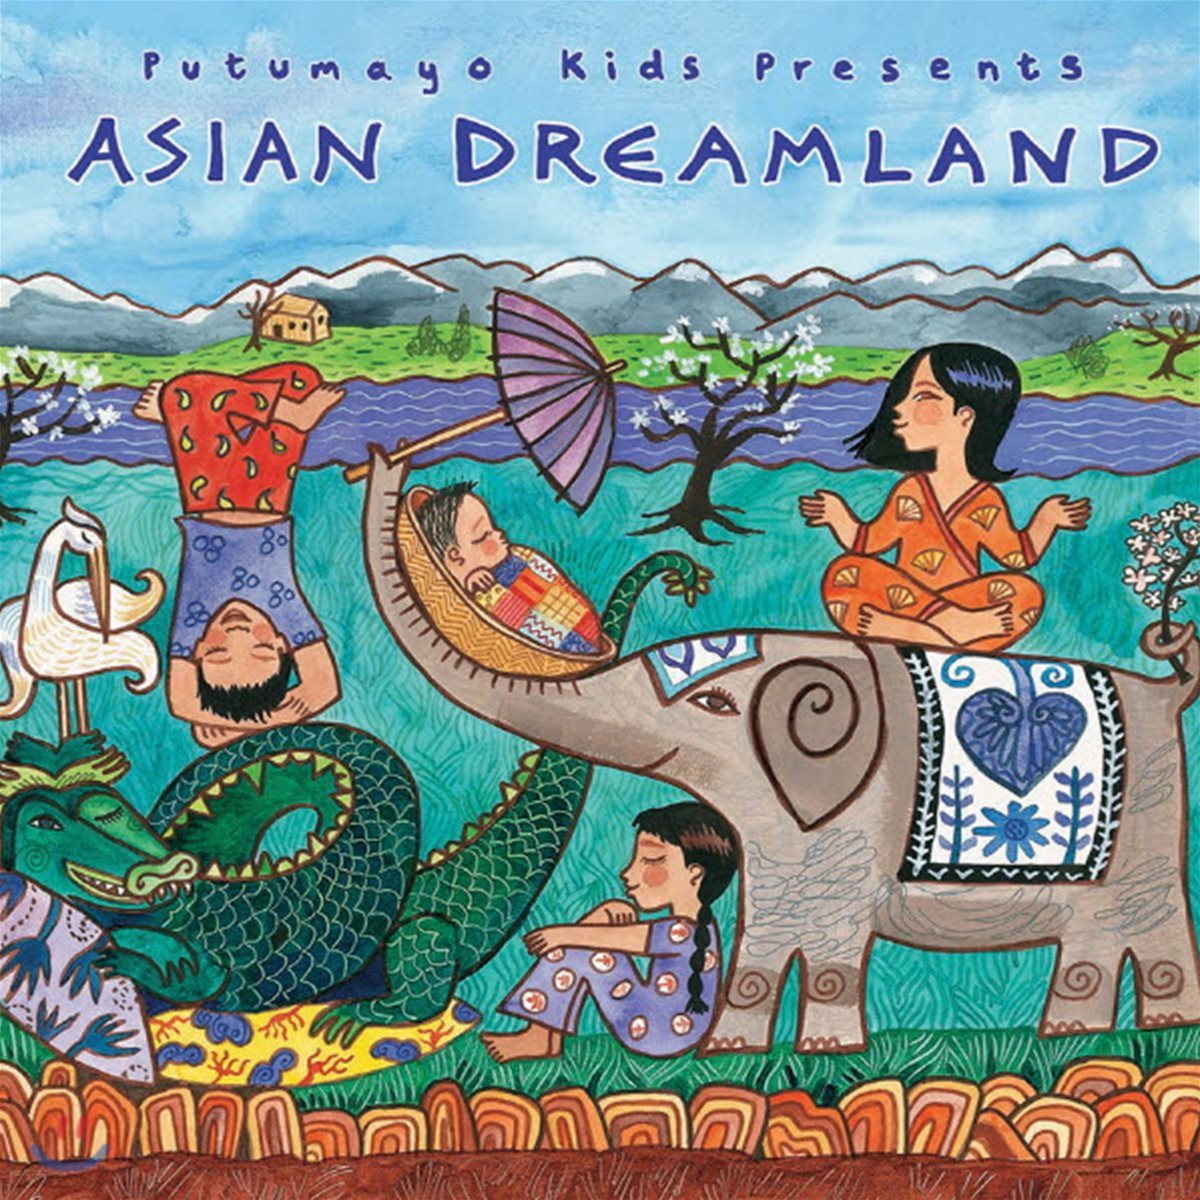 Putumayo Kids Presents Asian Dreamland (푸투마요 키즈 프레젠트 아시안 드림랜드)